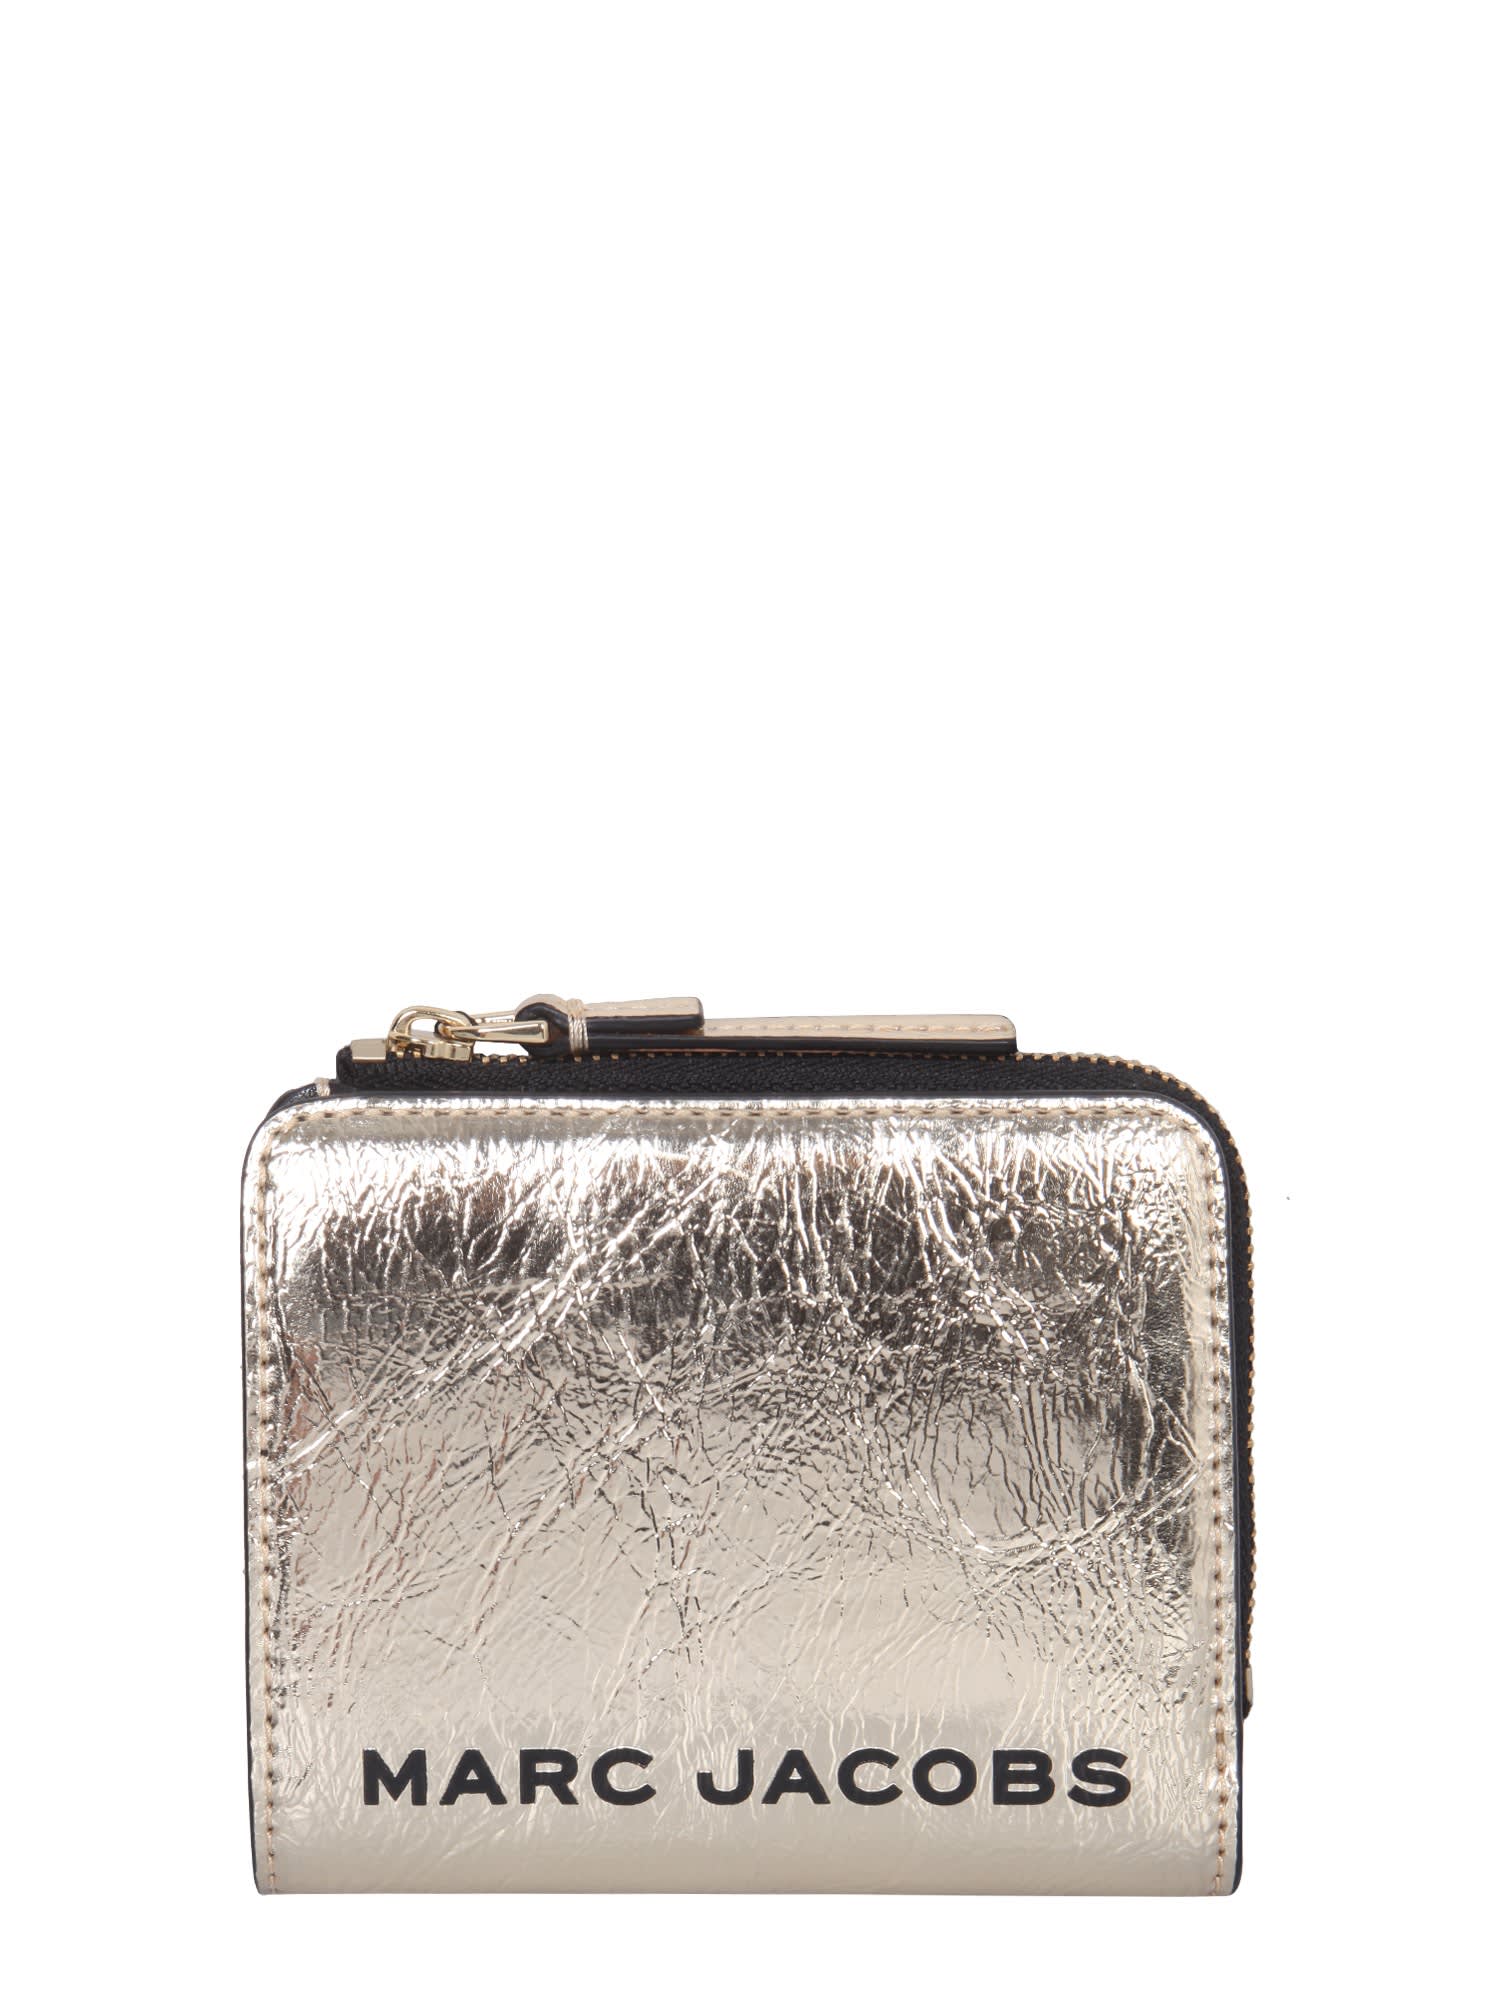 Marc Jacobs Mini The Metallic Compact Wallet